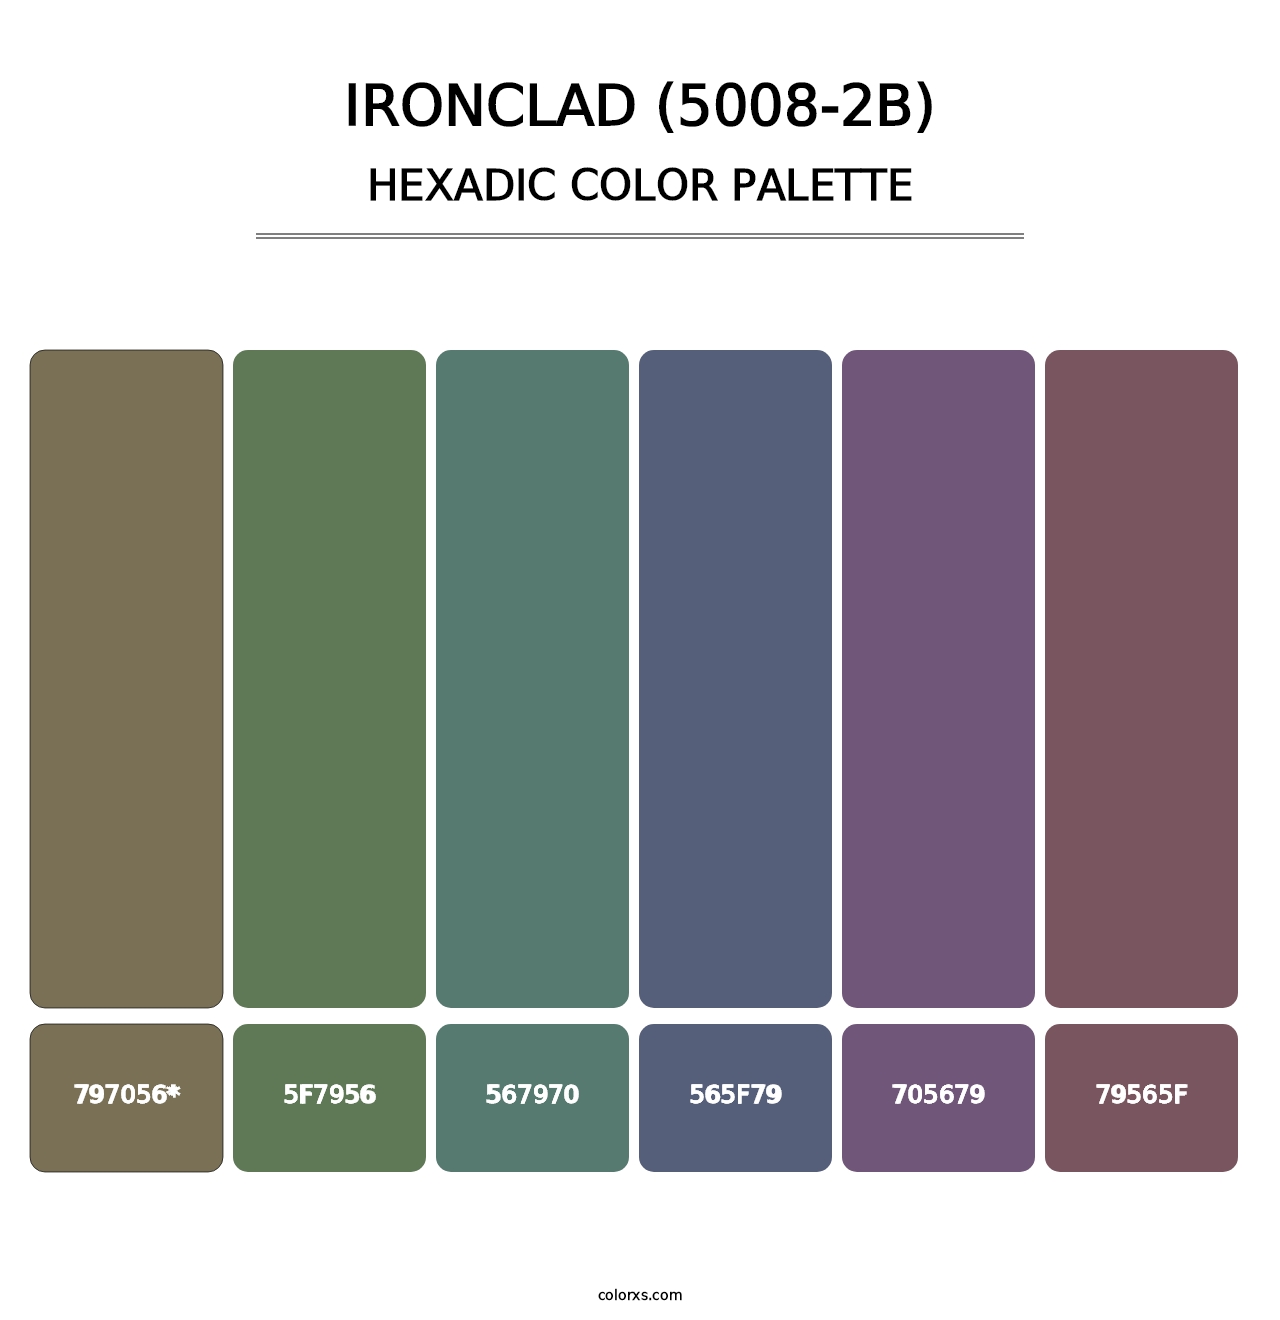 Ironclad (5008-2B) - Hexadic Color Palette